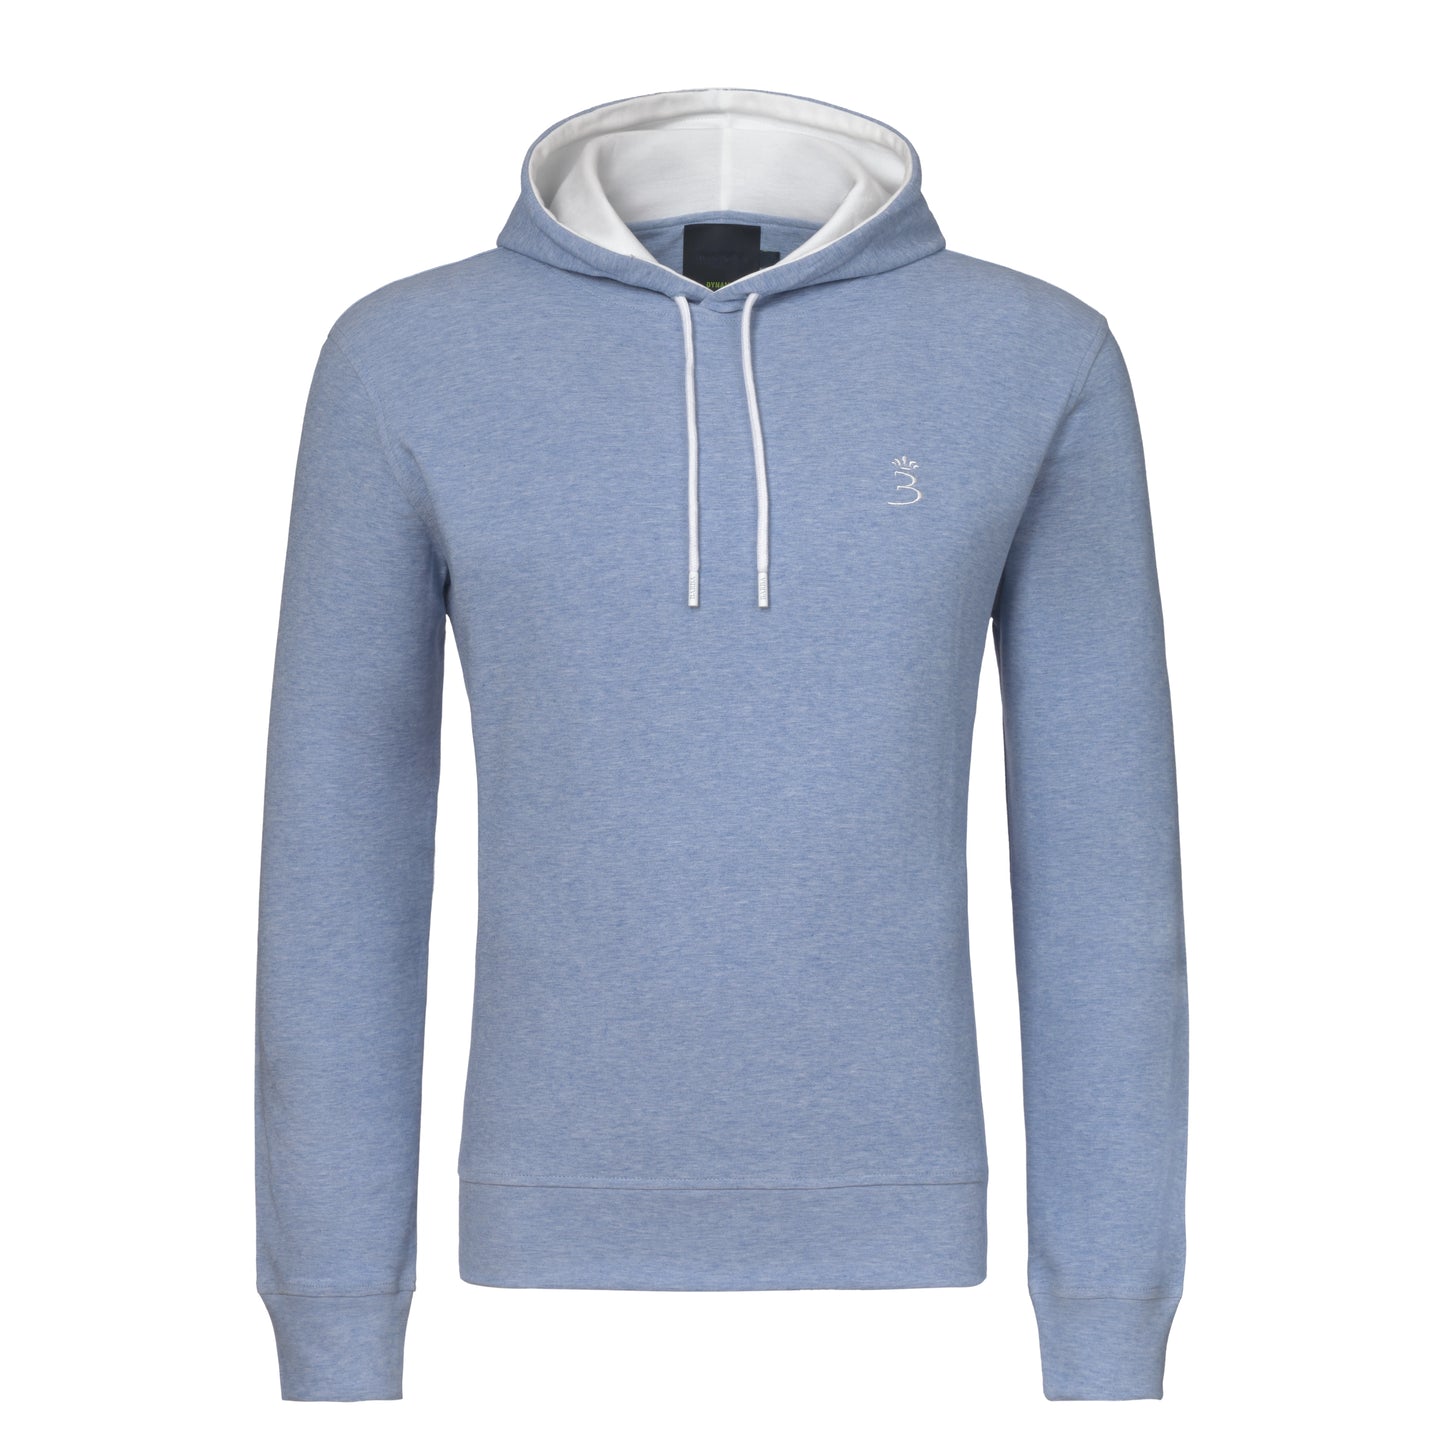 Hooded Sweatshirt in Light Blue Melange